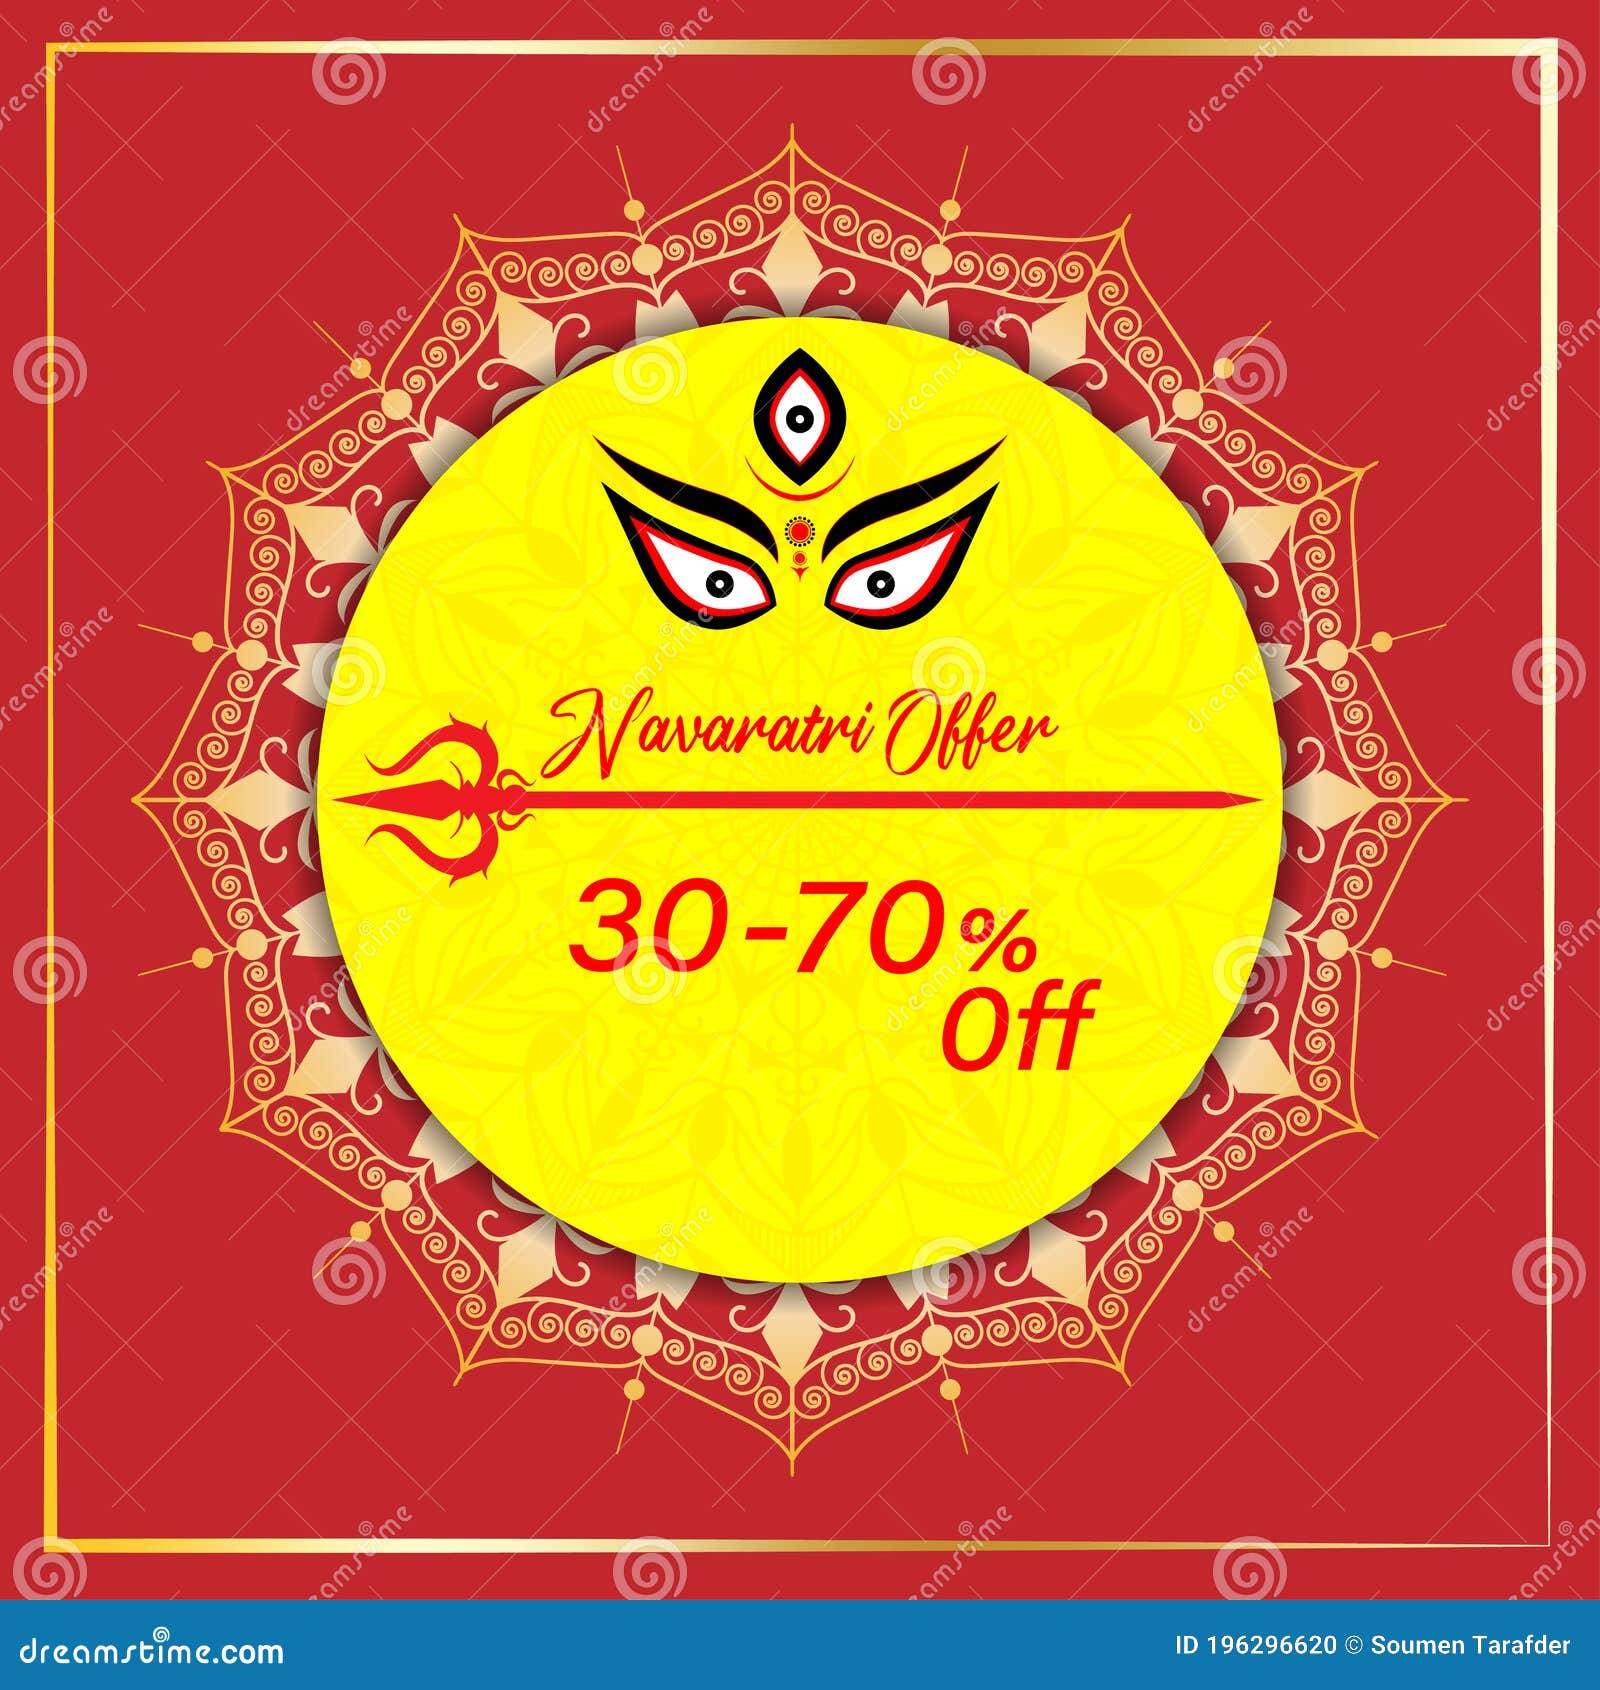 Navaratri Offer, Sale or Promotion Banner Vector Illustration Background  with Goddess Durga Eyes and Trishul Stock Vector - Illustration of  creative, religion: 196296620